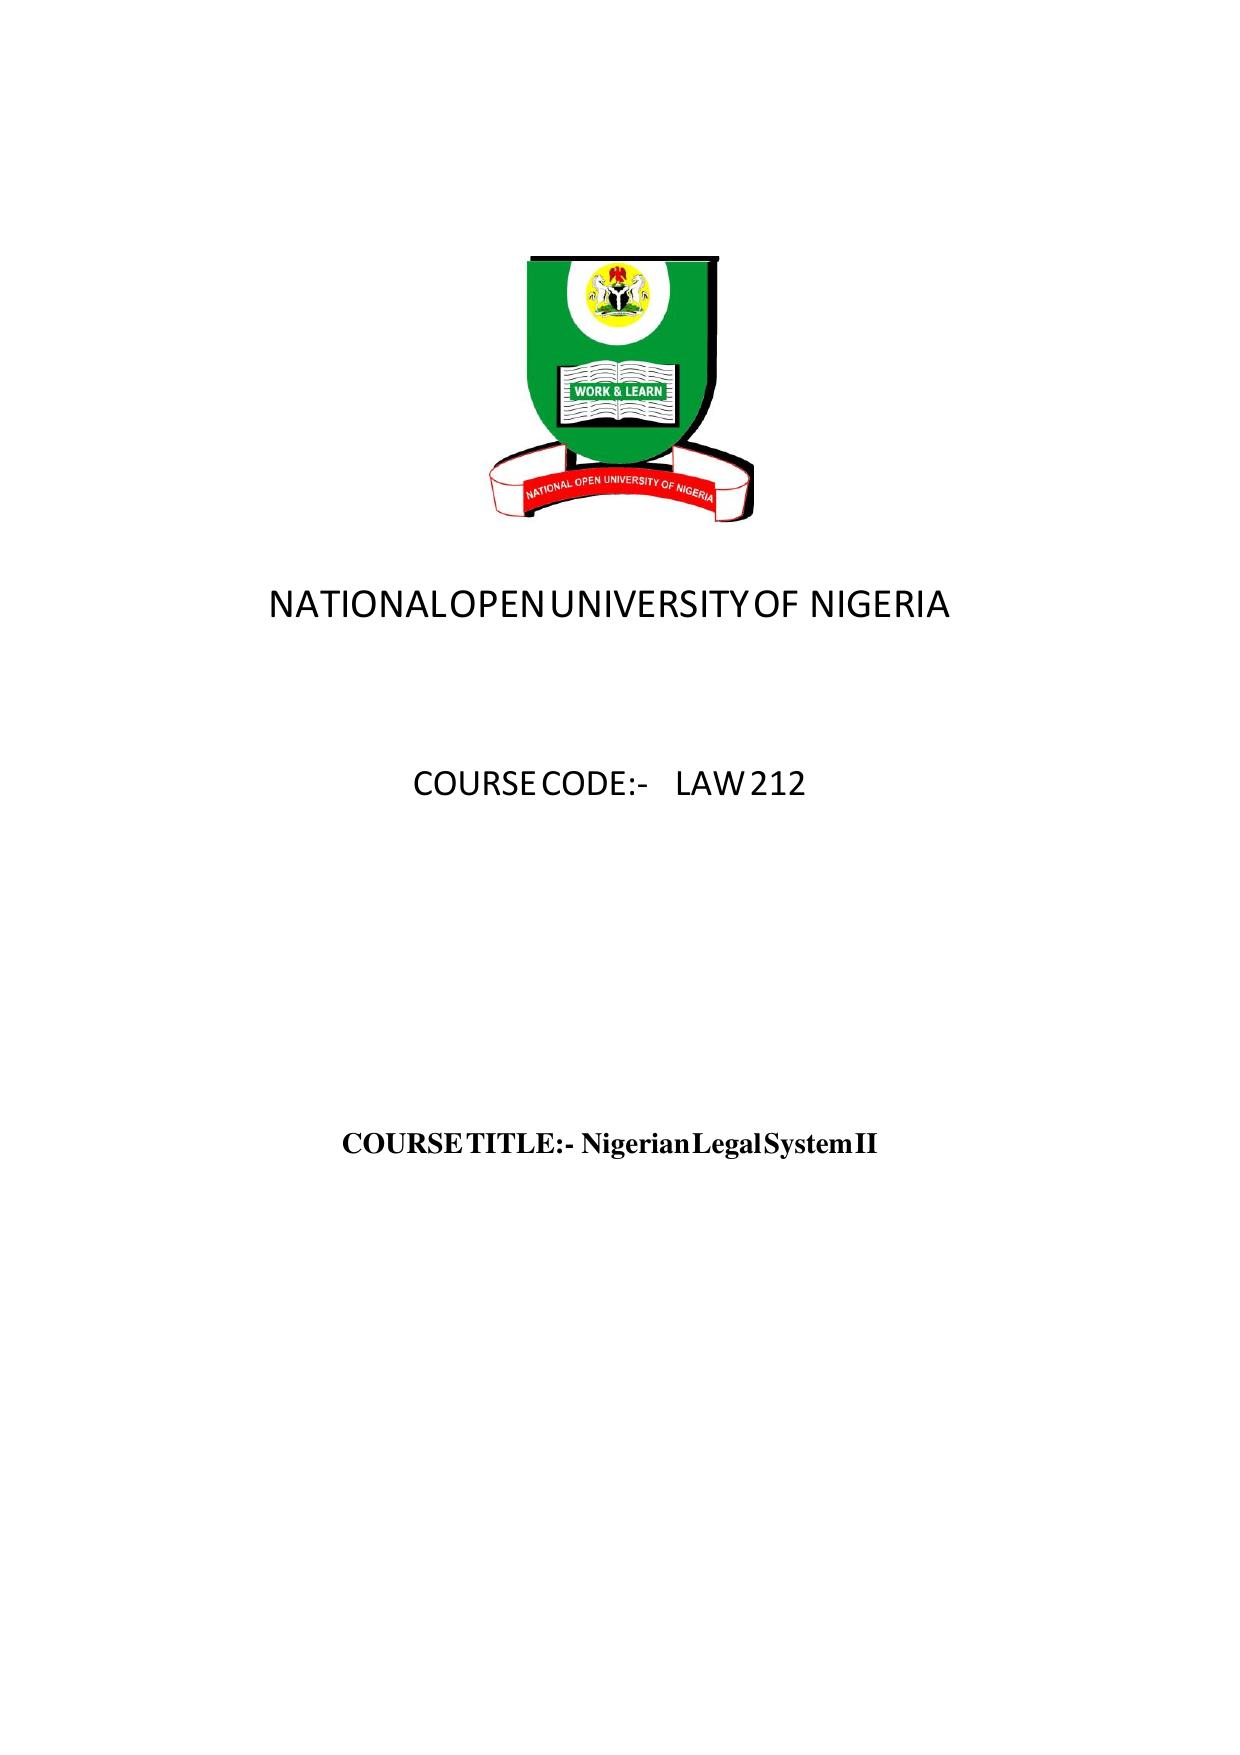 THE NIGERIA LEGAL SYSTEM 2